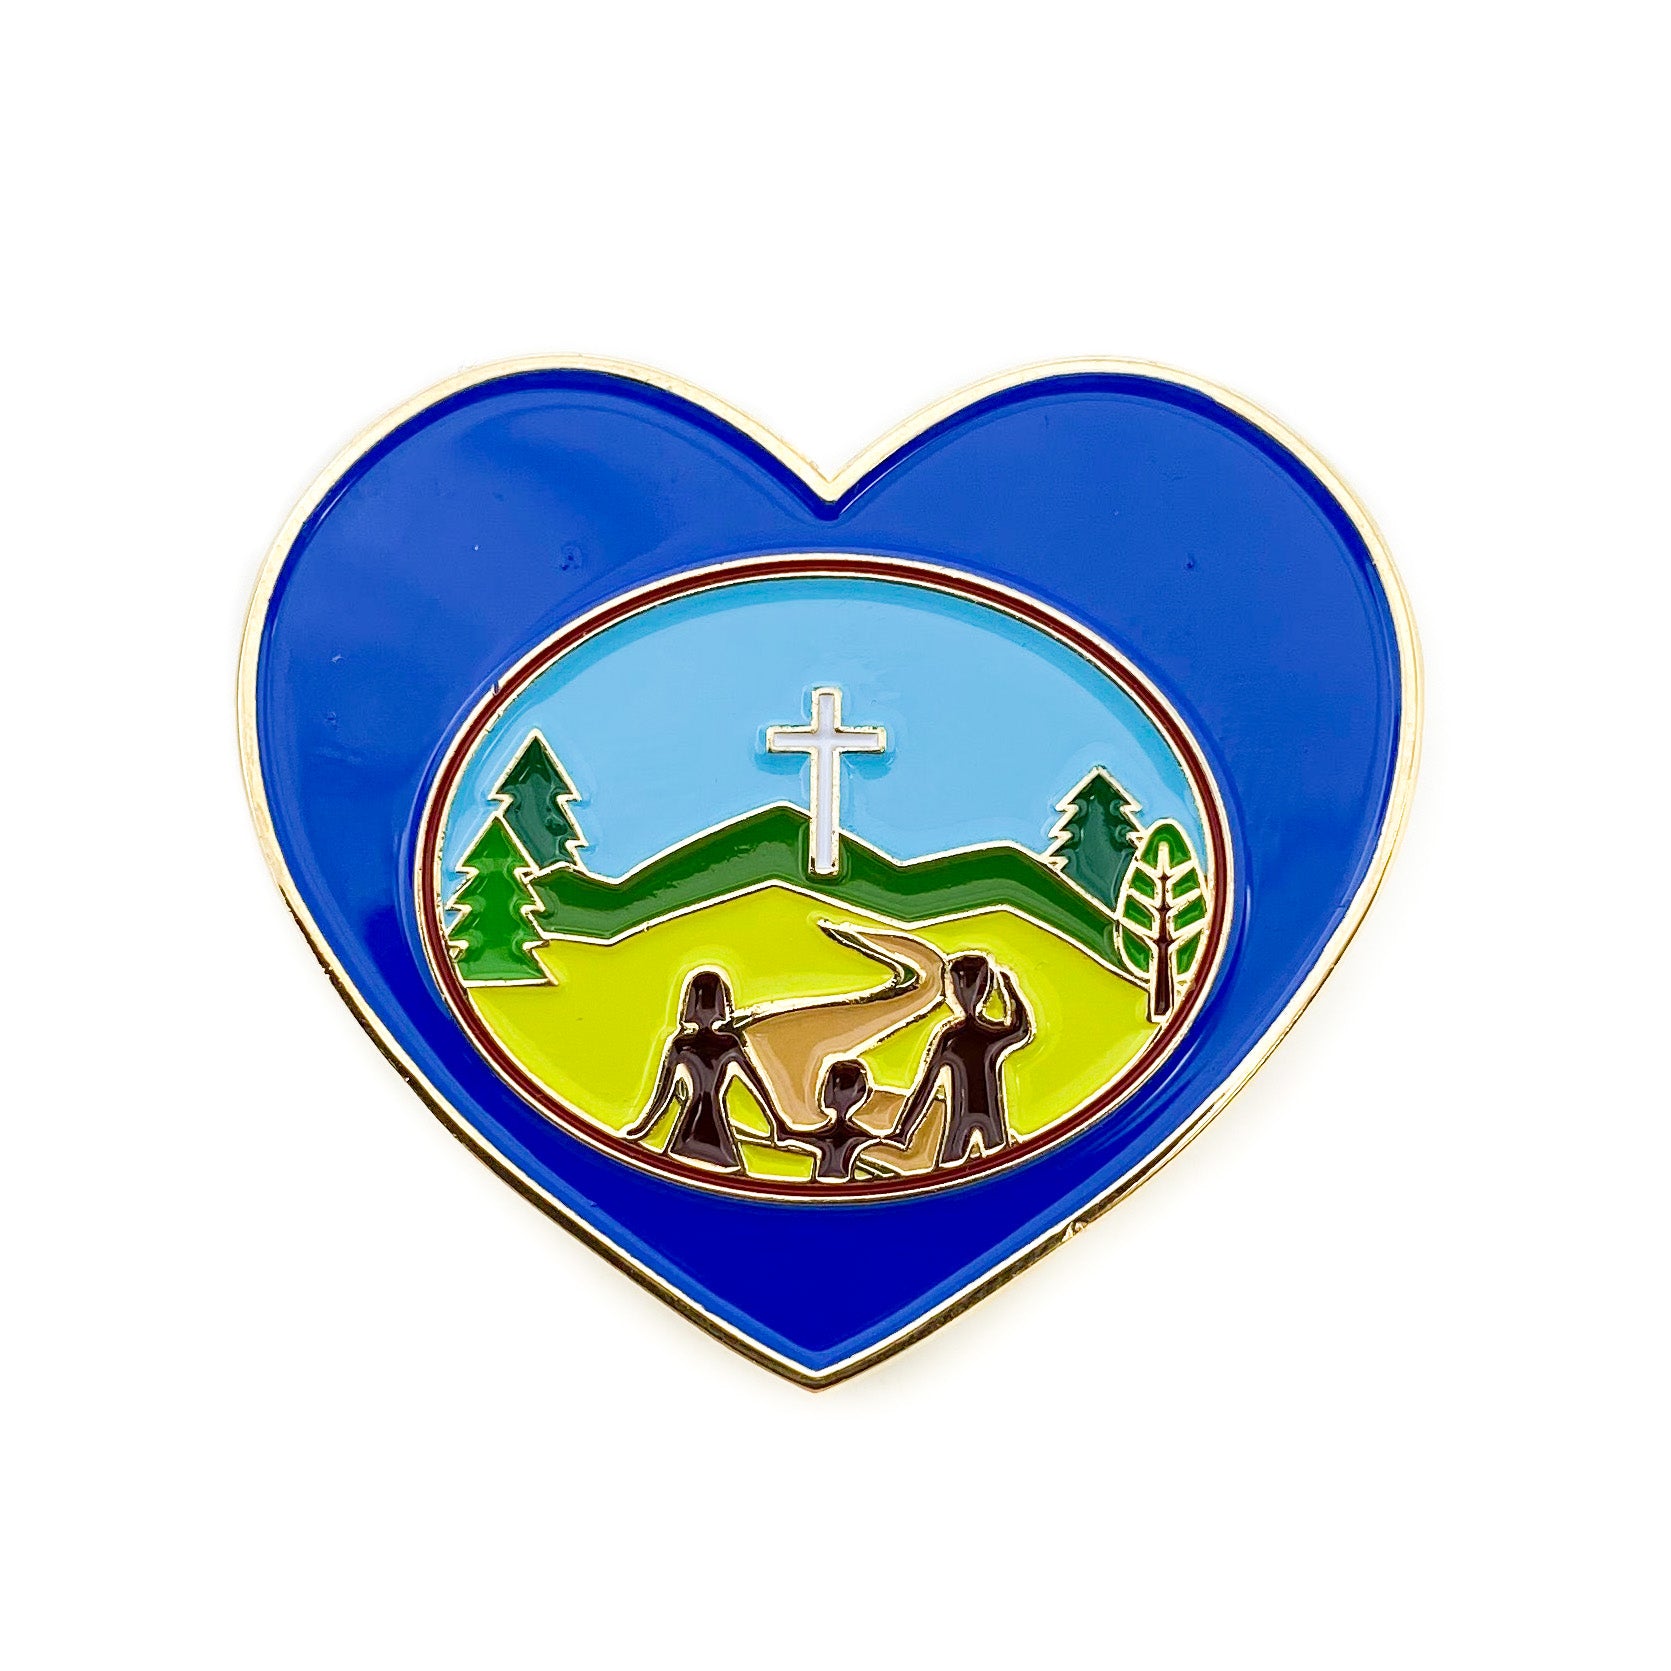 Adventurer Club Heart Pin - Pinfinder Club